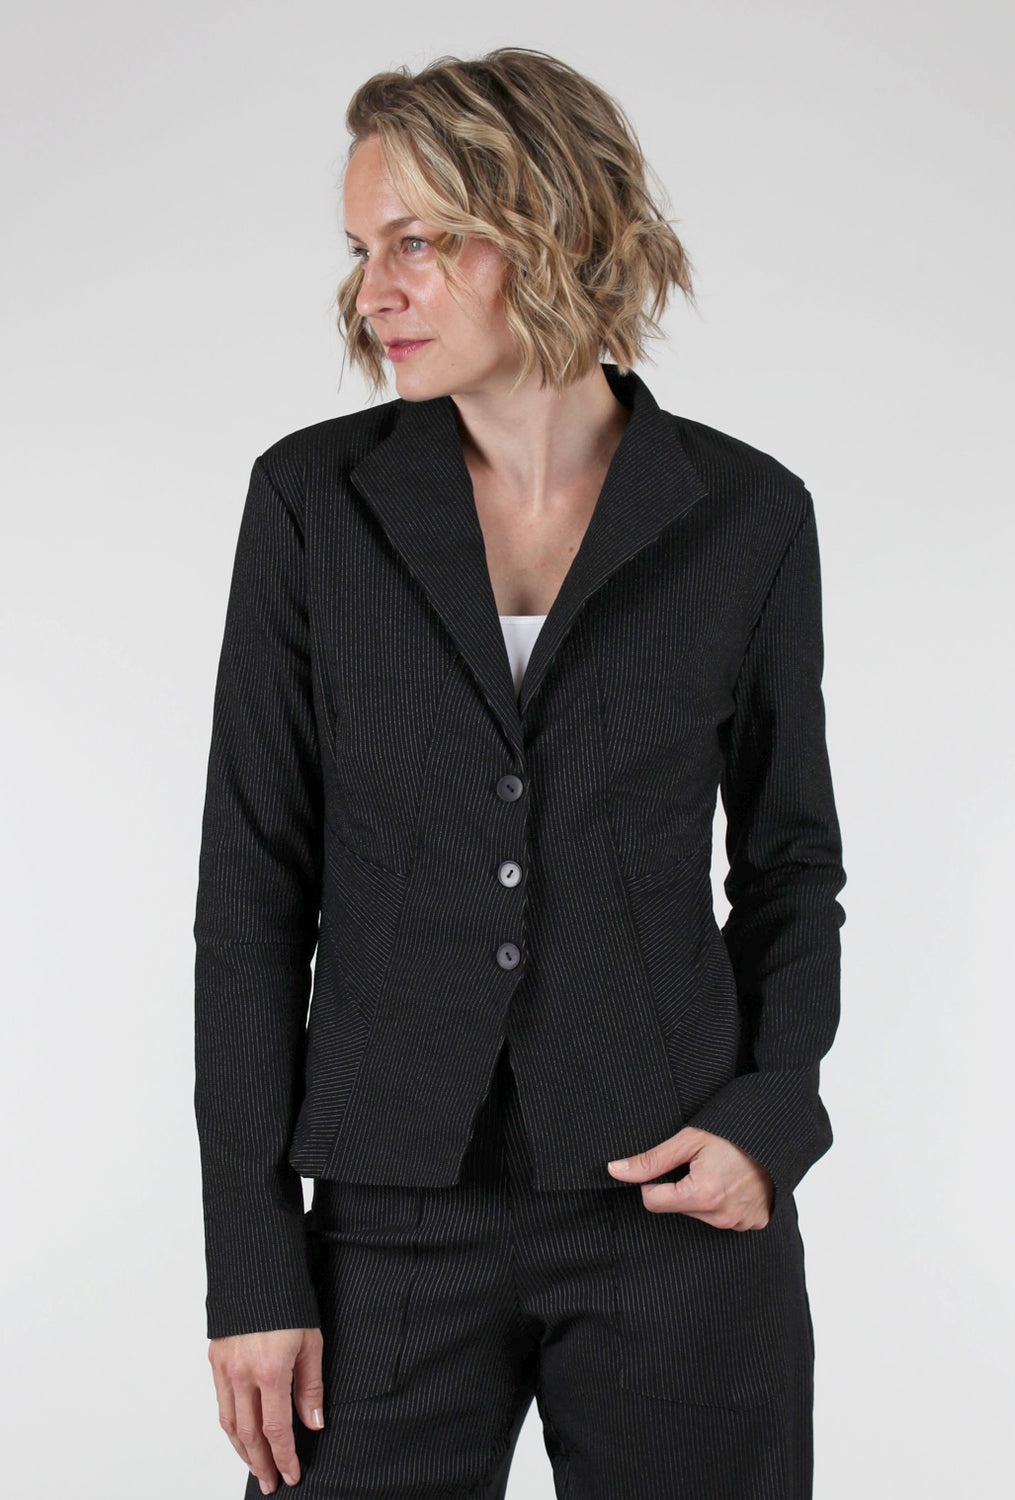 Porto Rousseau Jacket, Black Stripe 